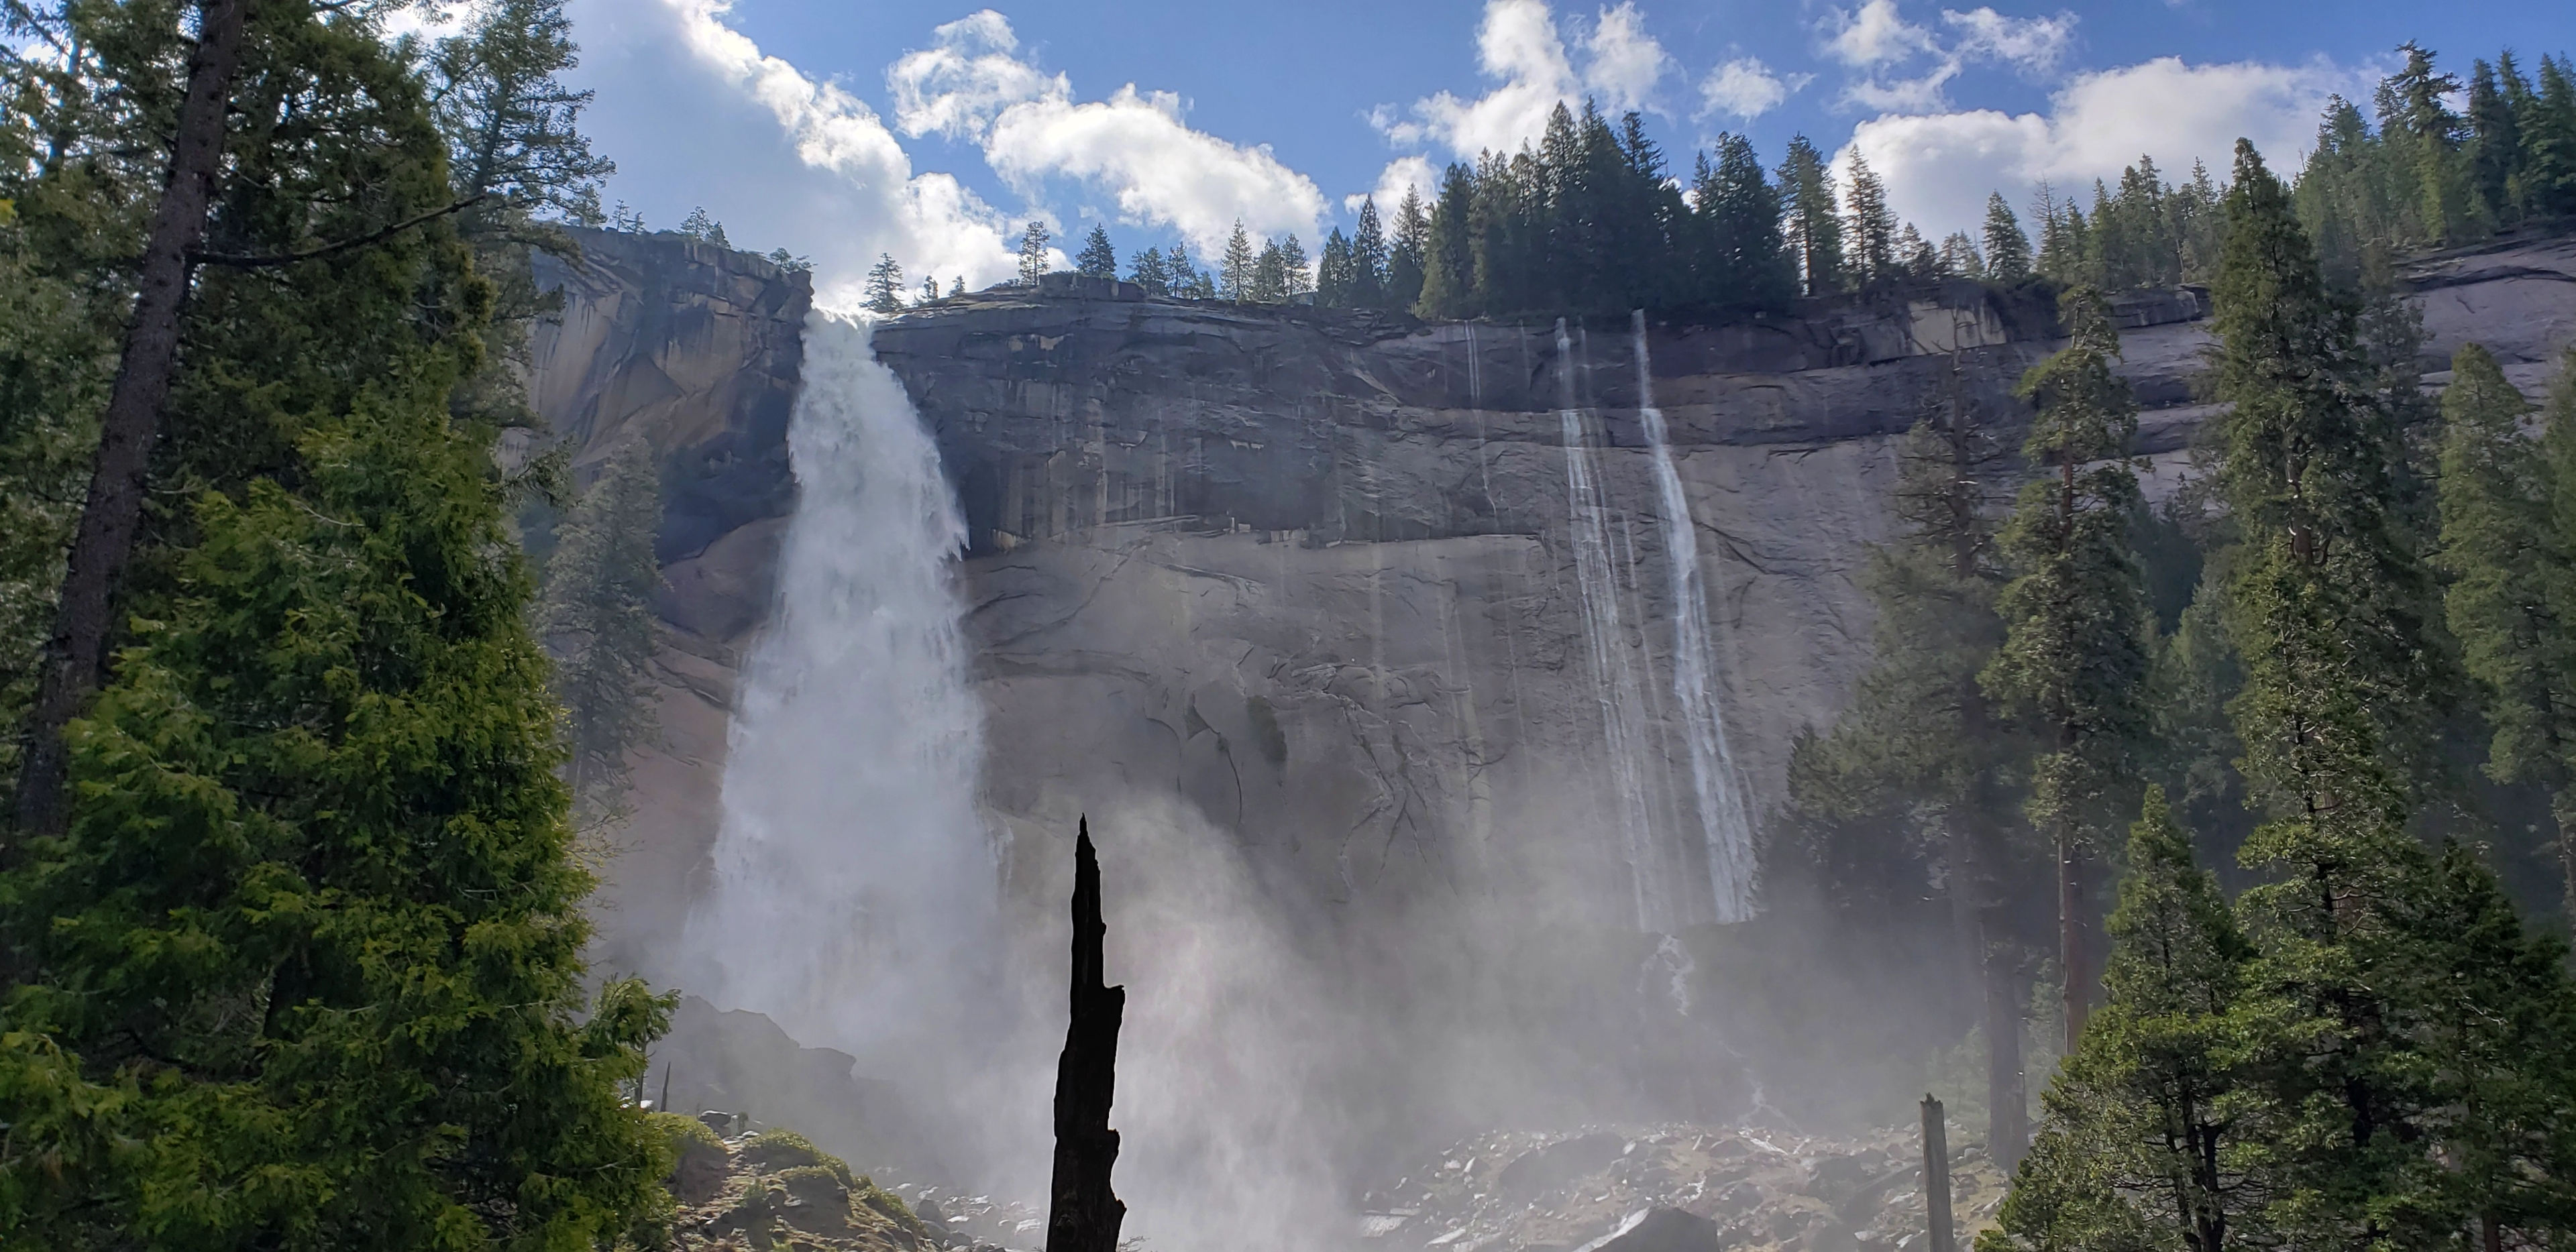 Nevada Fall Yosemite National Park - 594 foot plunge